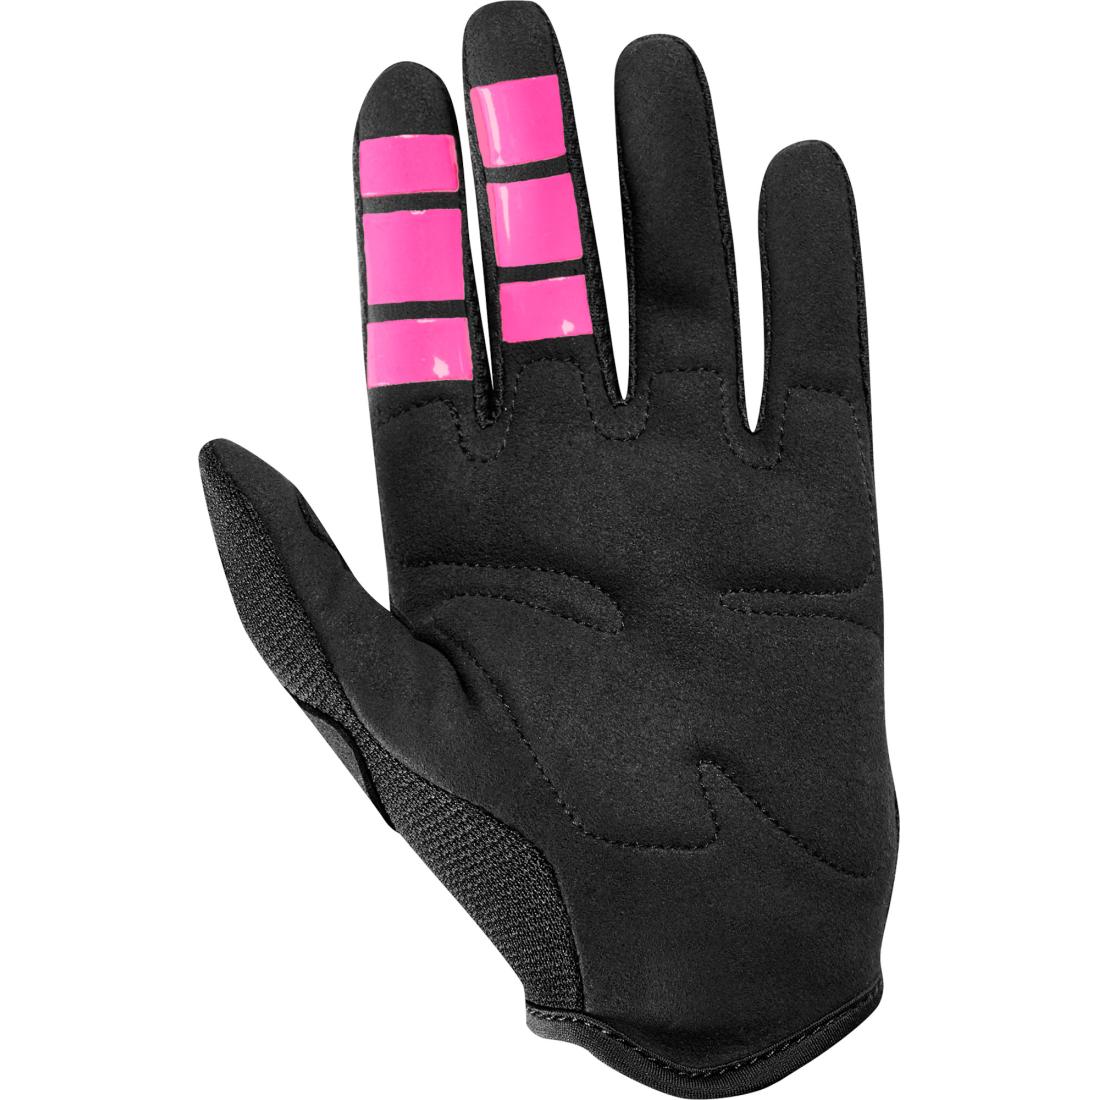 Kids Dirtpaw Glove Black/Pink